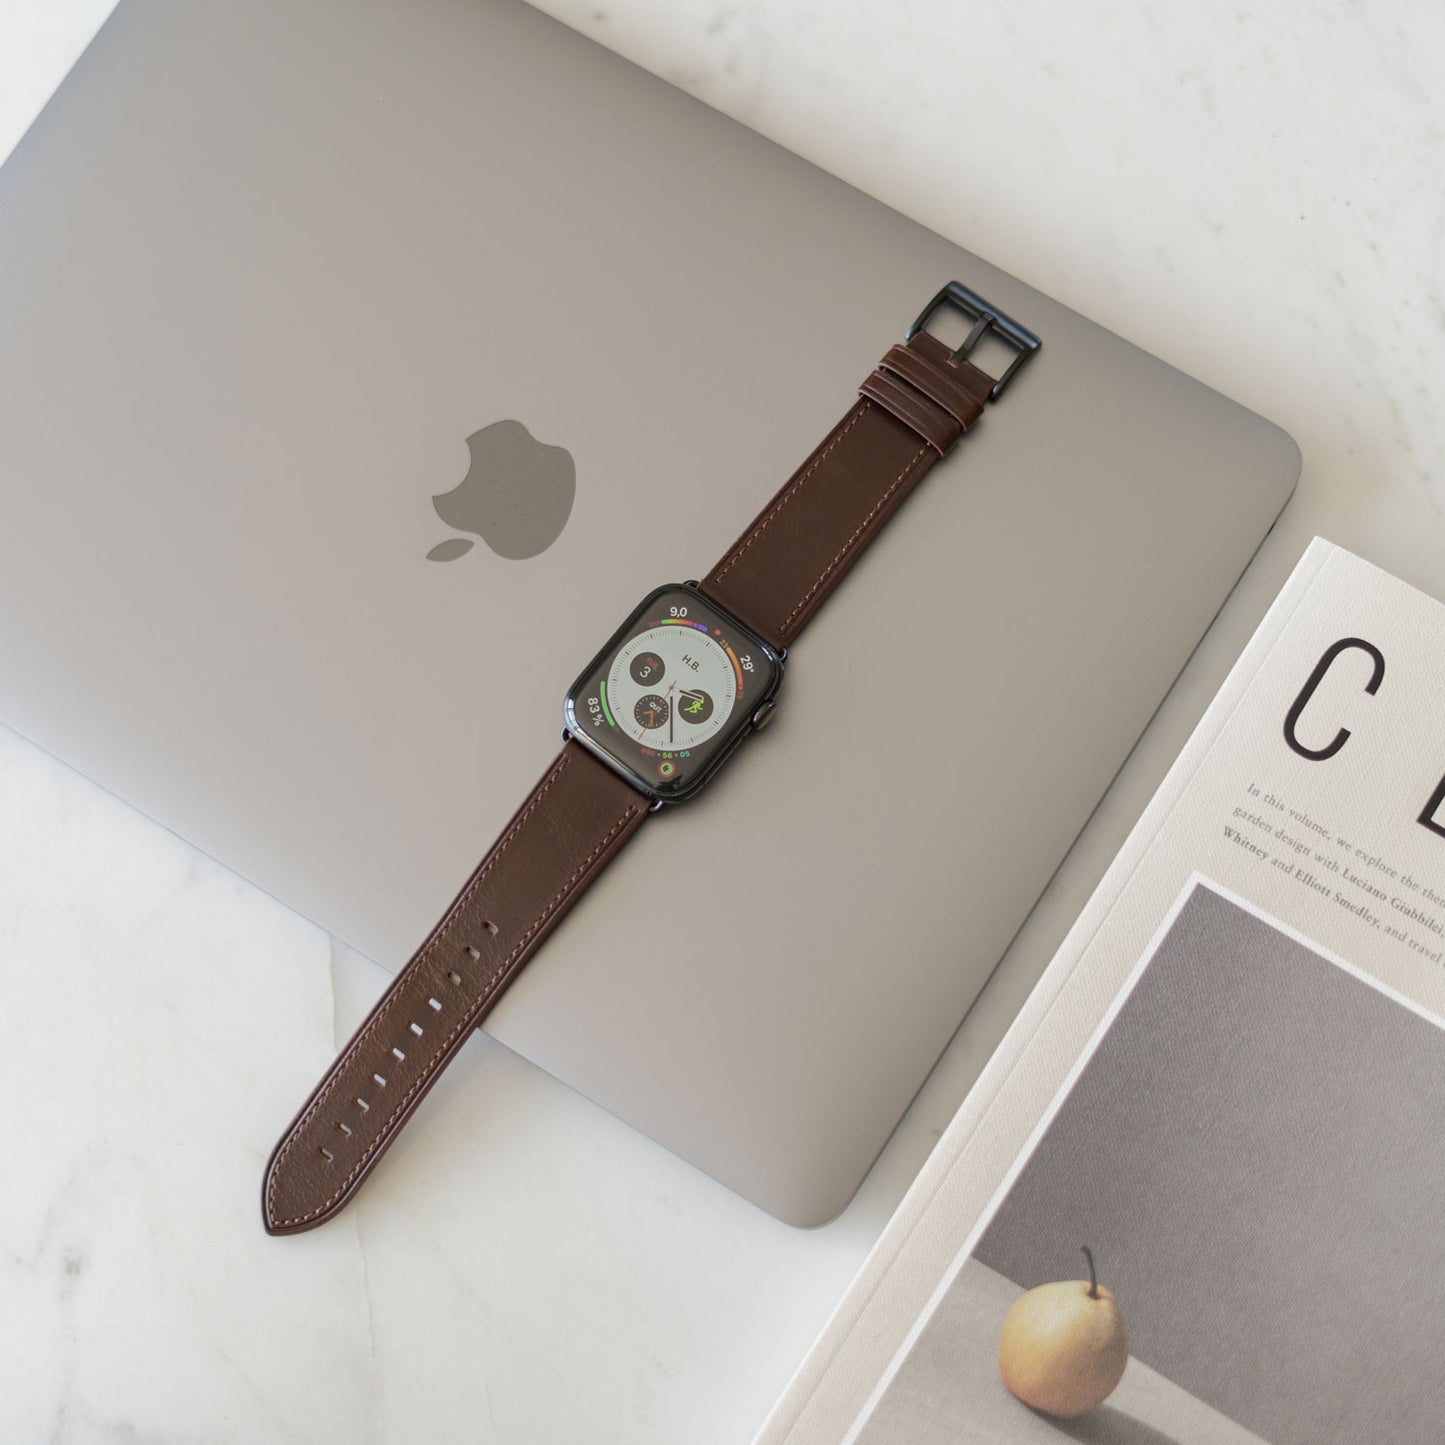 arktisband Apple Watch Lederarmband "Premium"